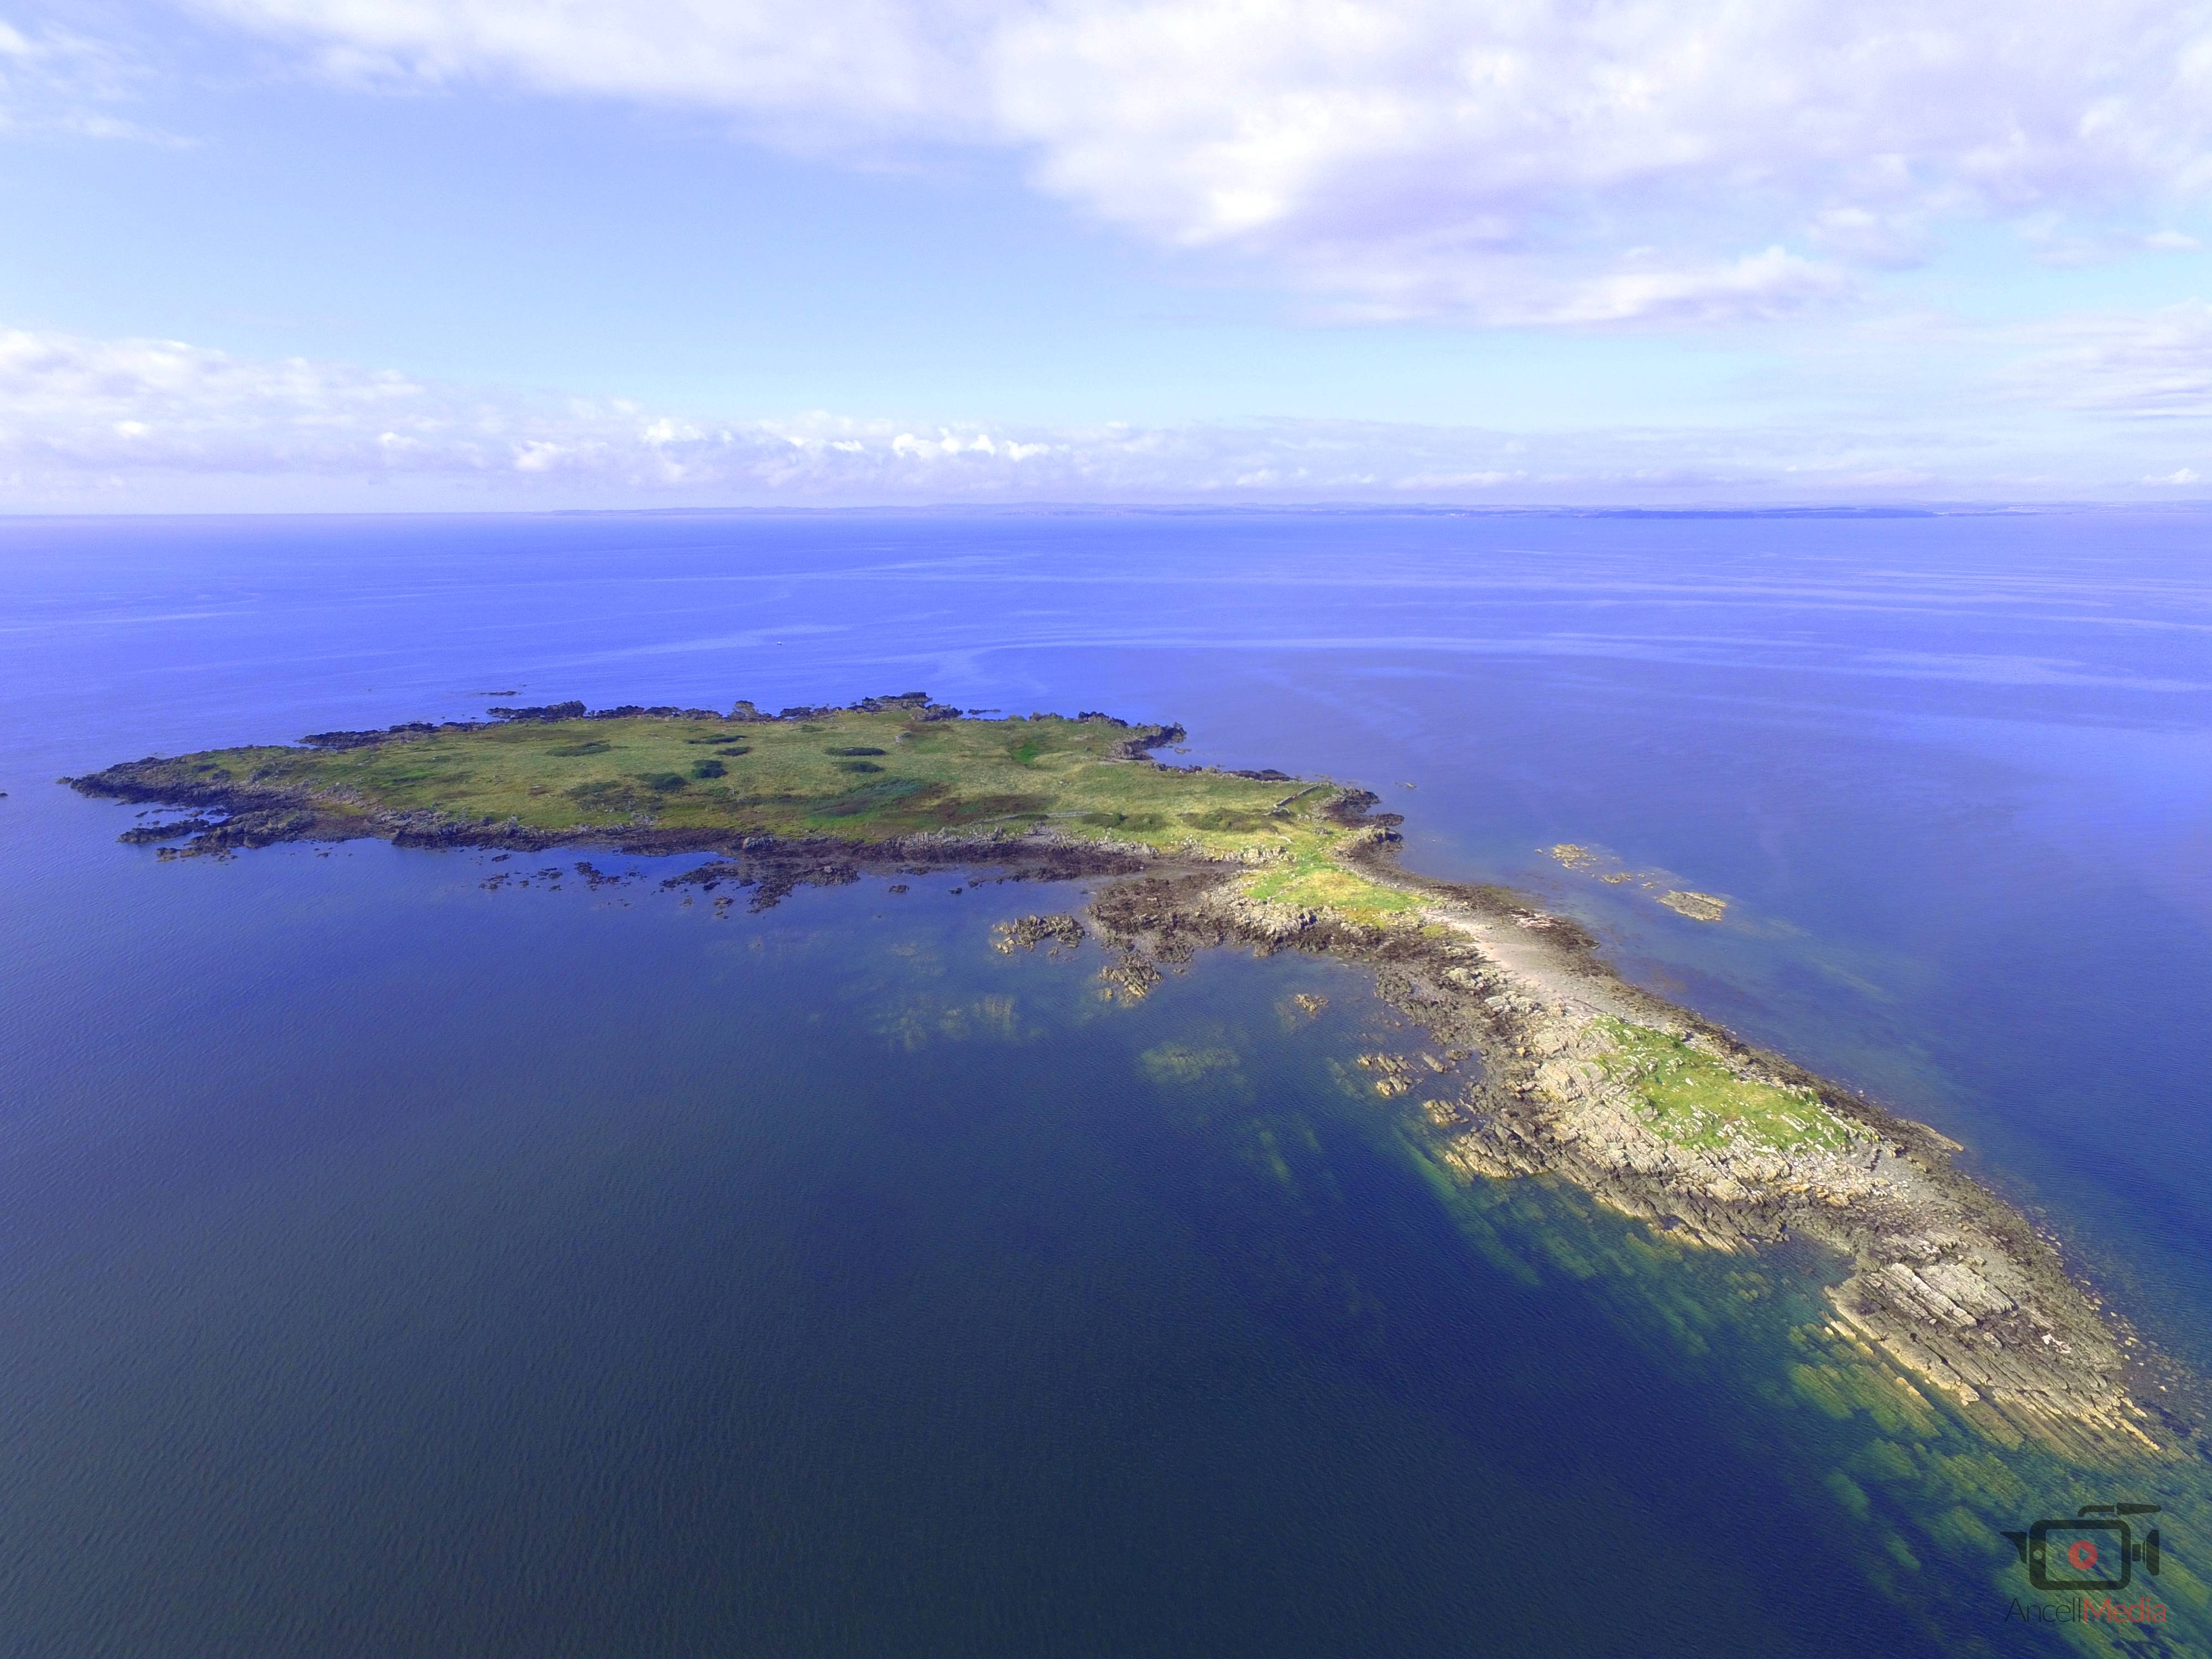 Arial shot of Barlocco Island